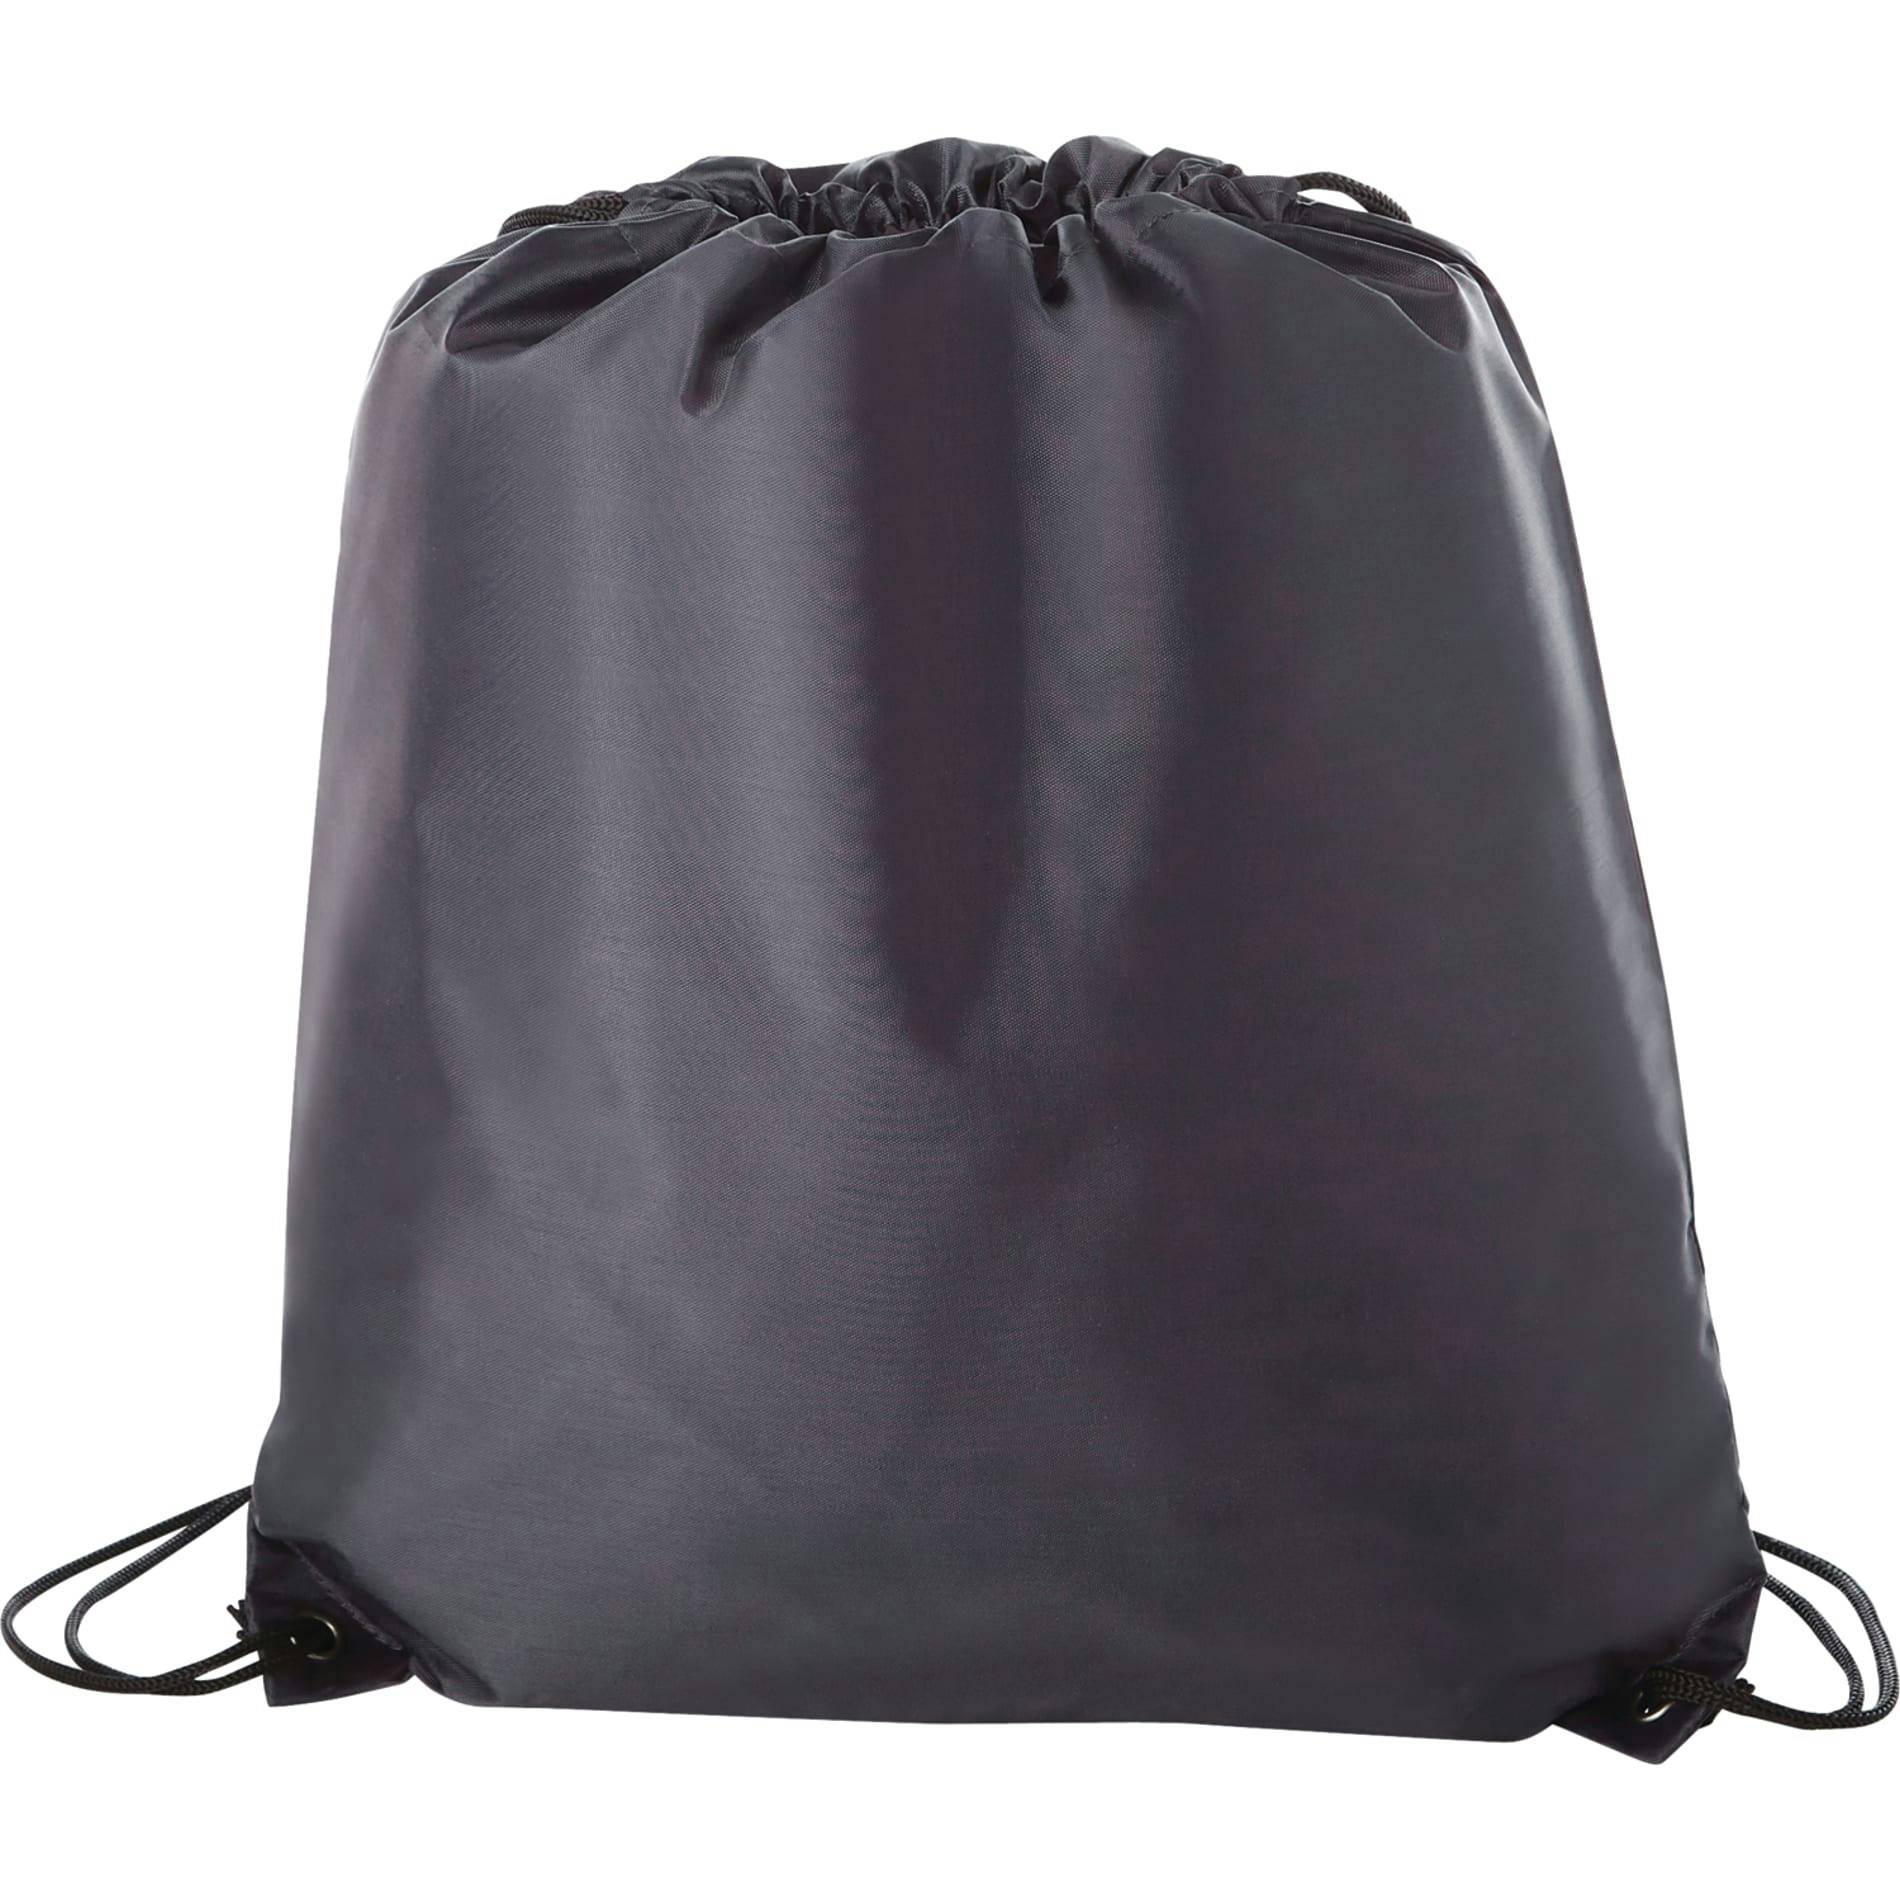 Oriole Drawstring Bag - additional Image 1